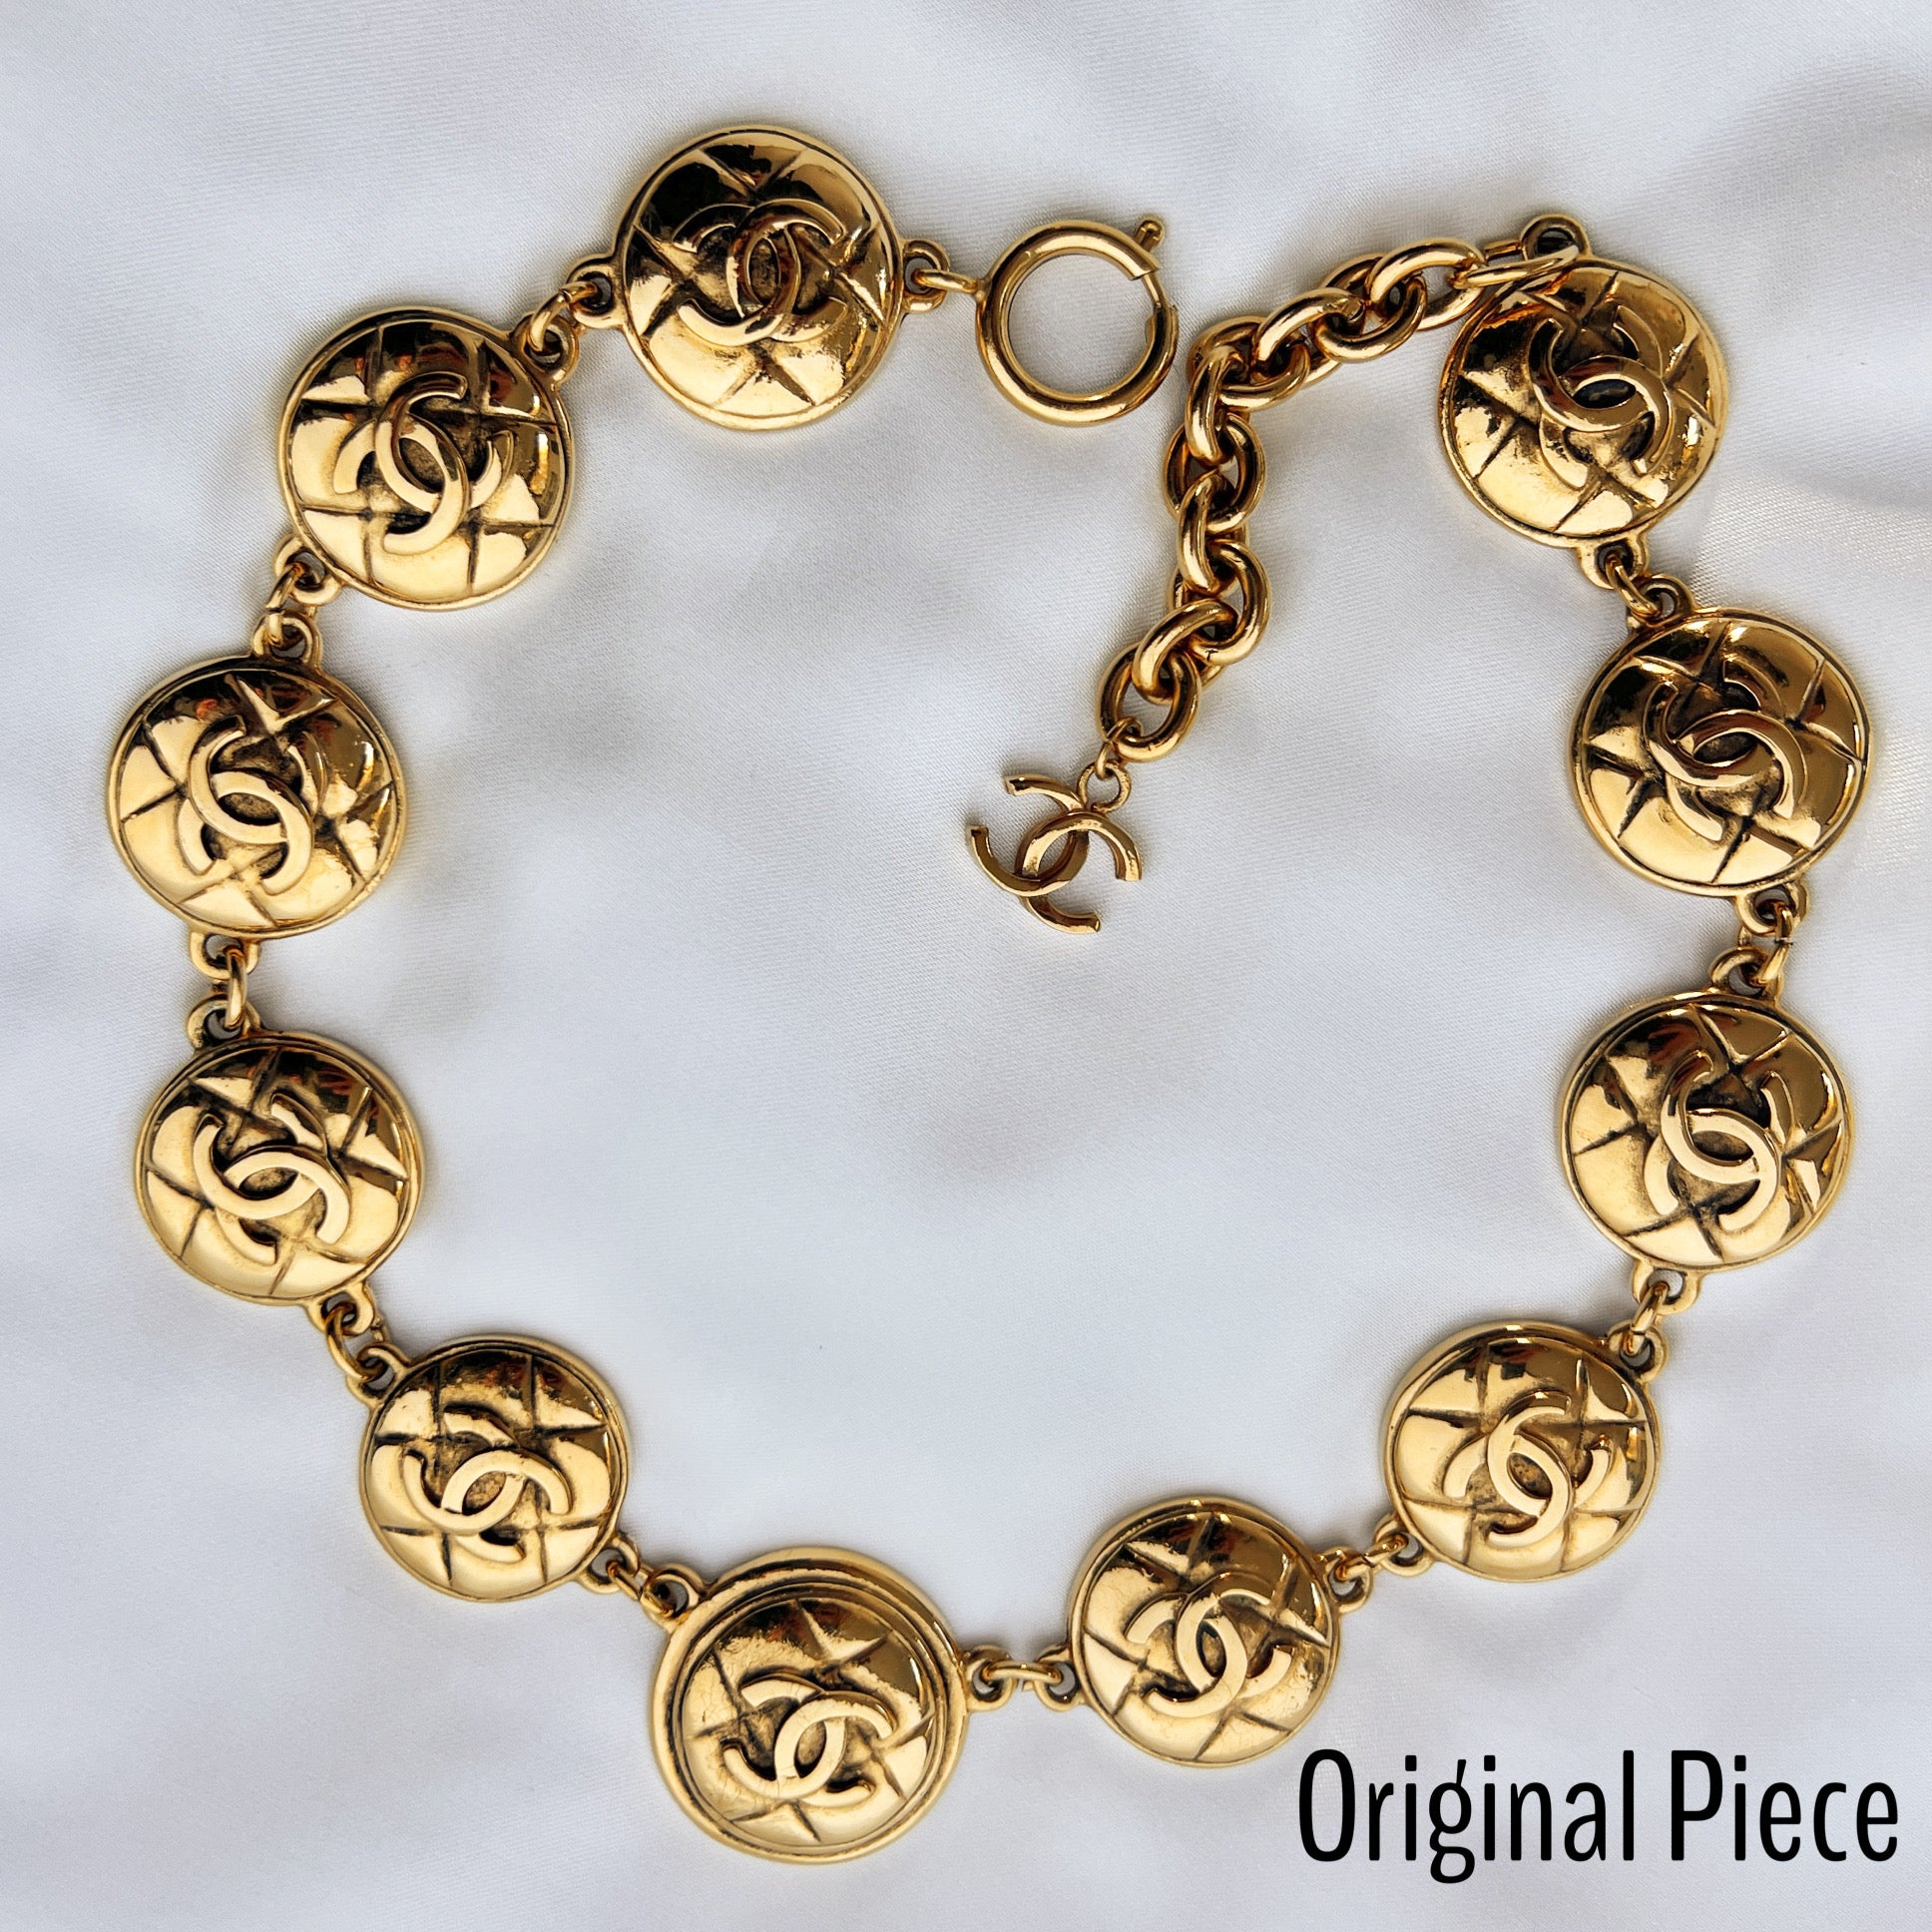 Gold Quilted Bracelet